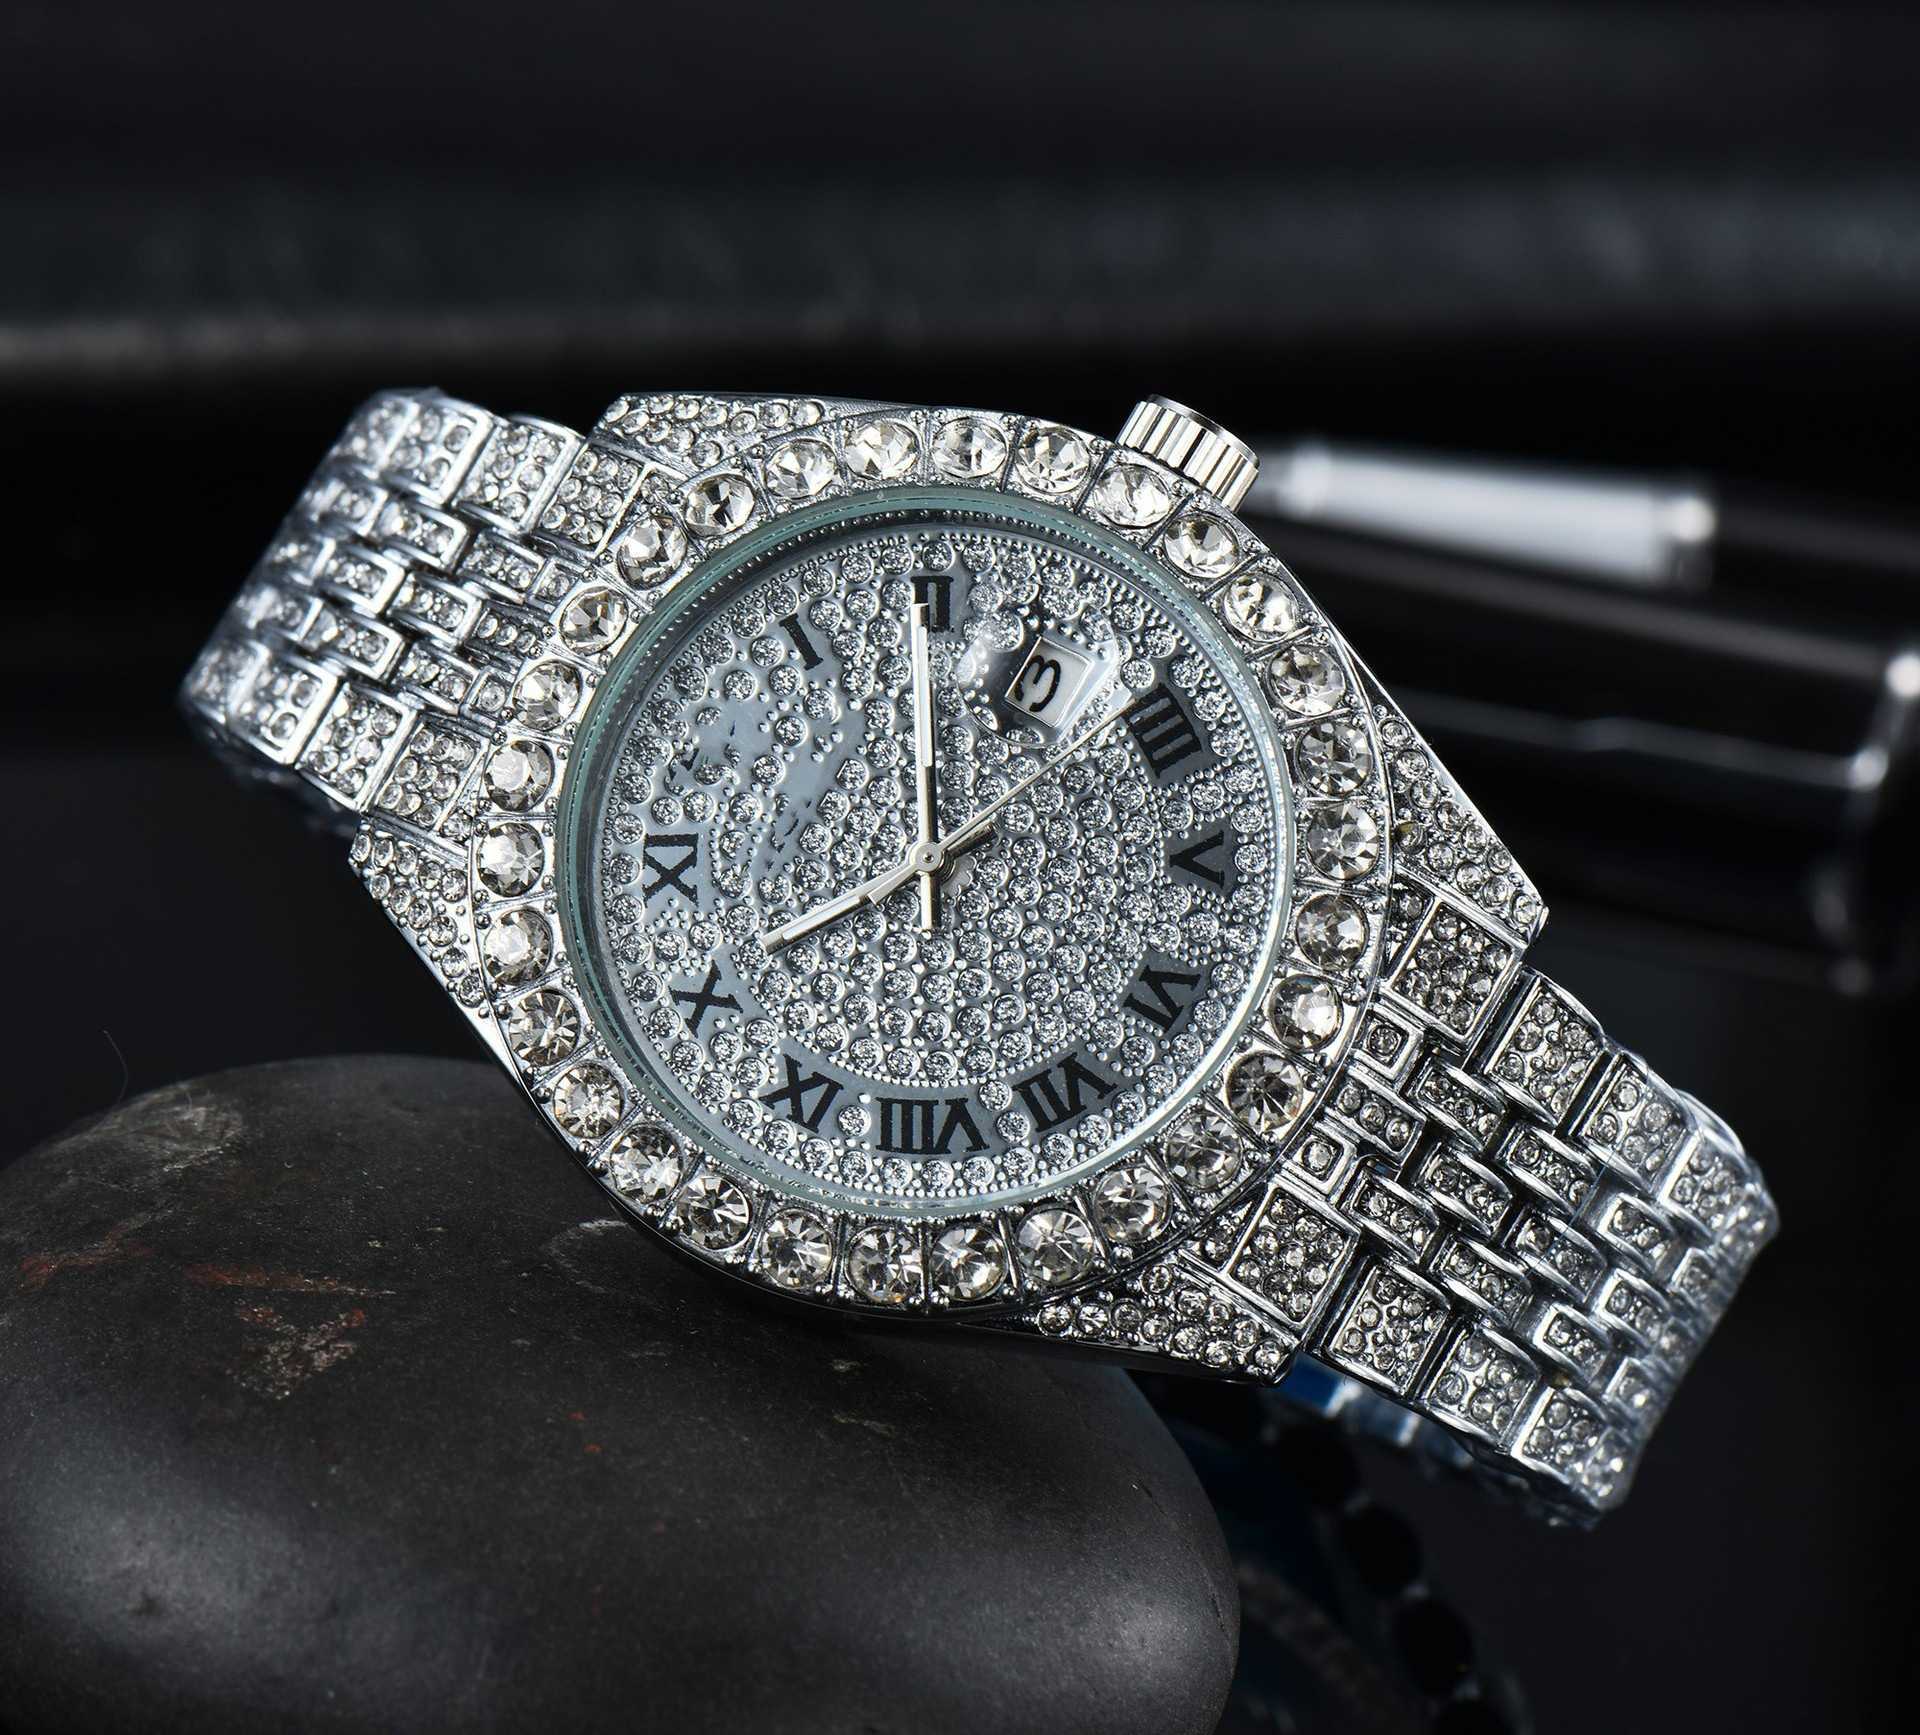 Projektant Watch Factory CS Bestselling Lao Family Diamond Five Full Sky Star Trendy Sen Series Watches